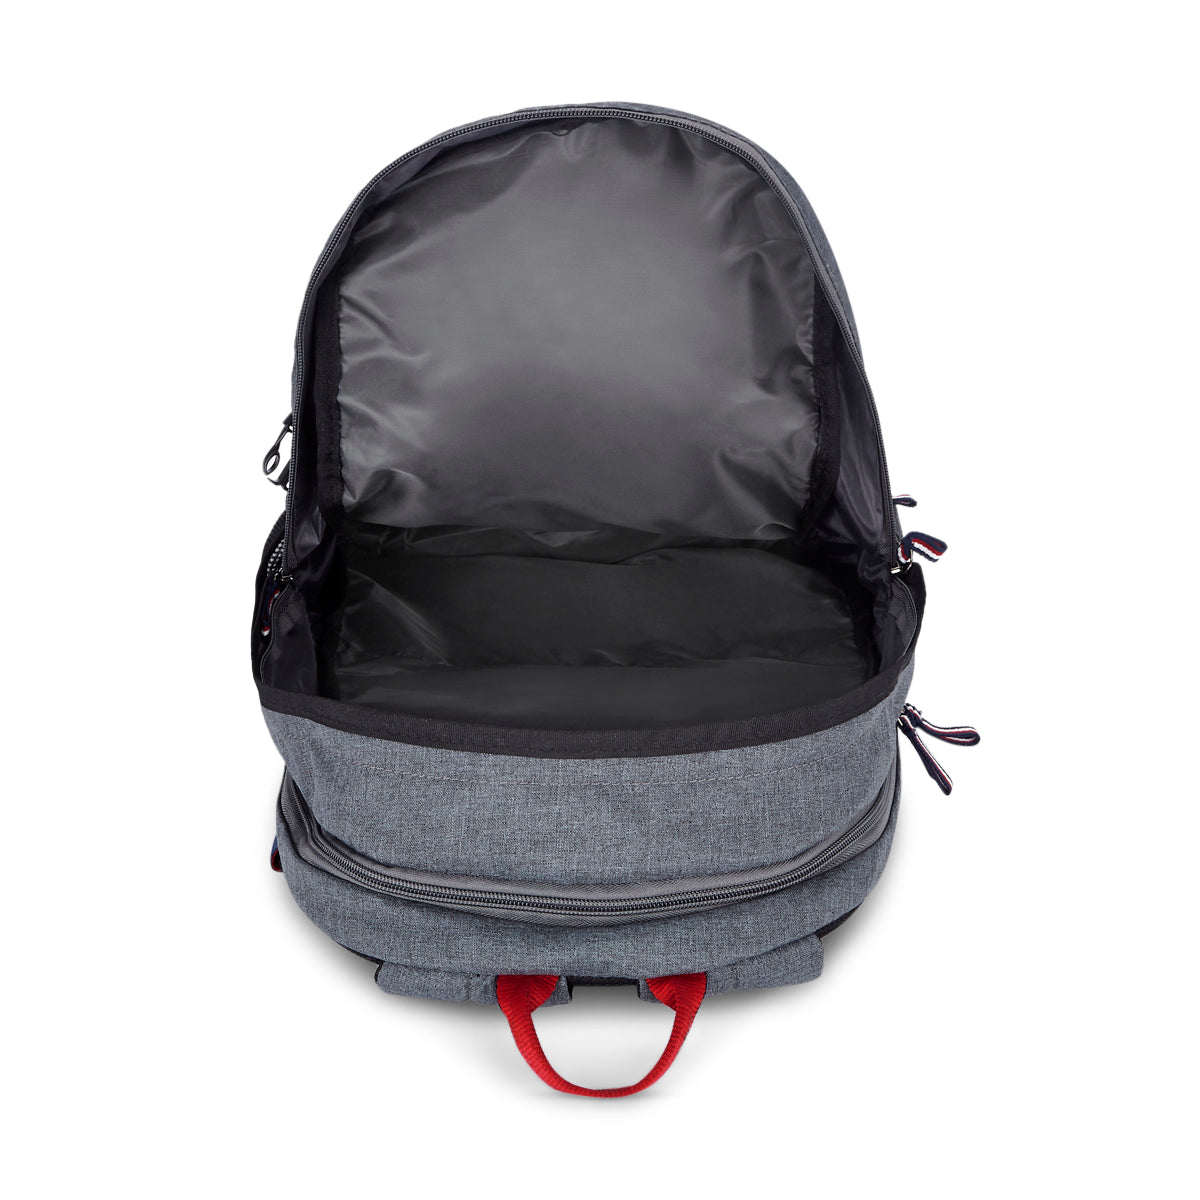 Tommy Hilfiger Android Unisex Melange Fabric 15 Inch Laptop Backpack Grey